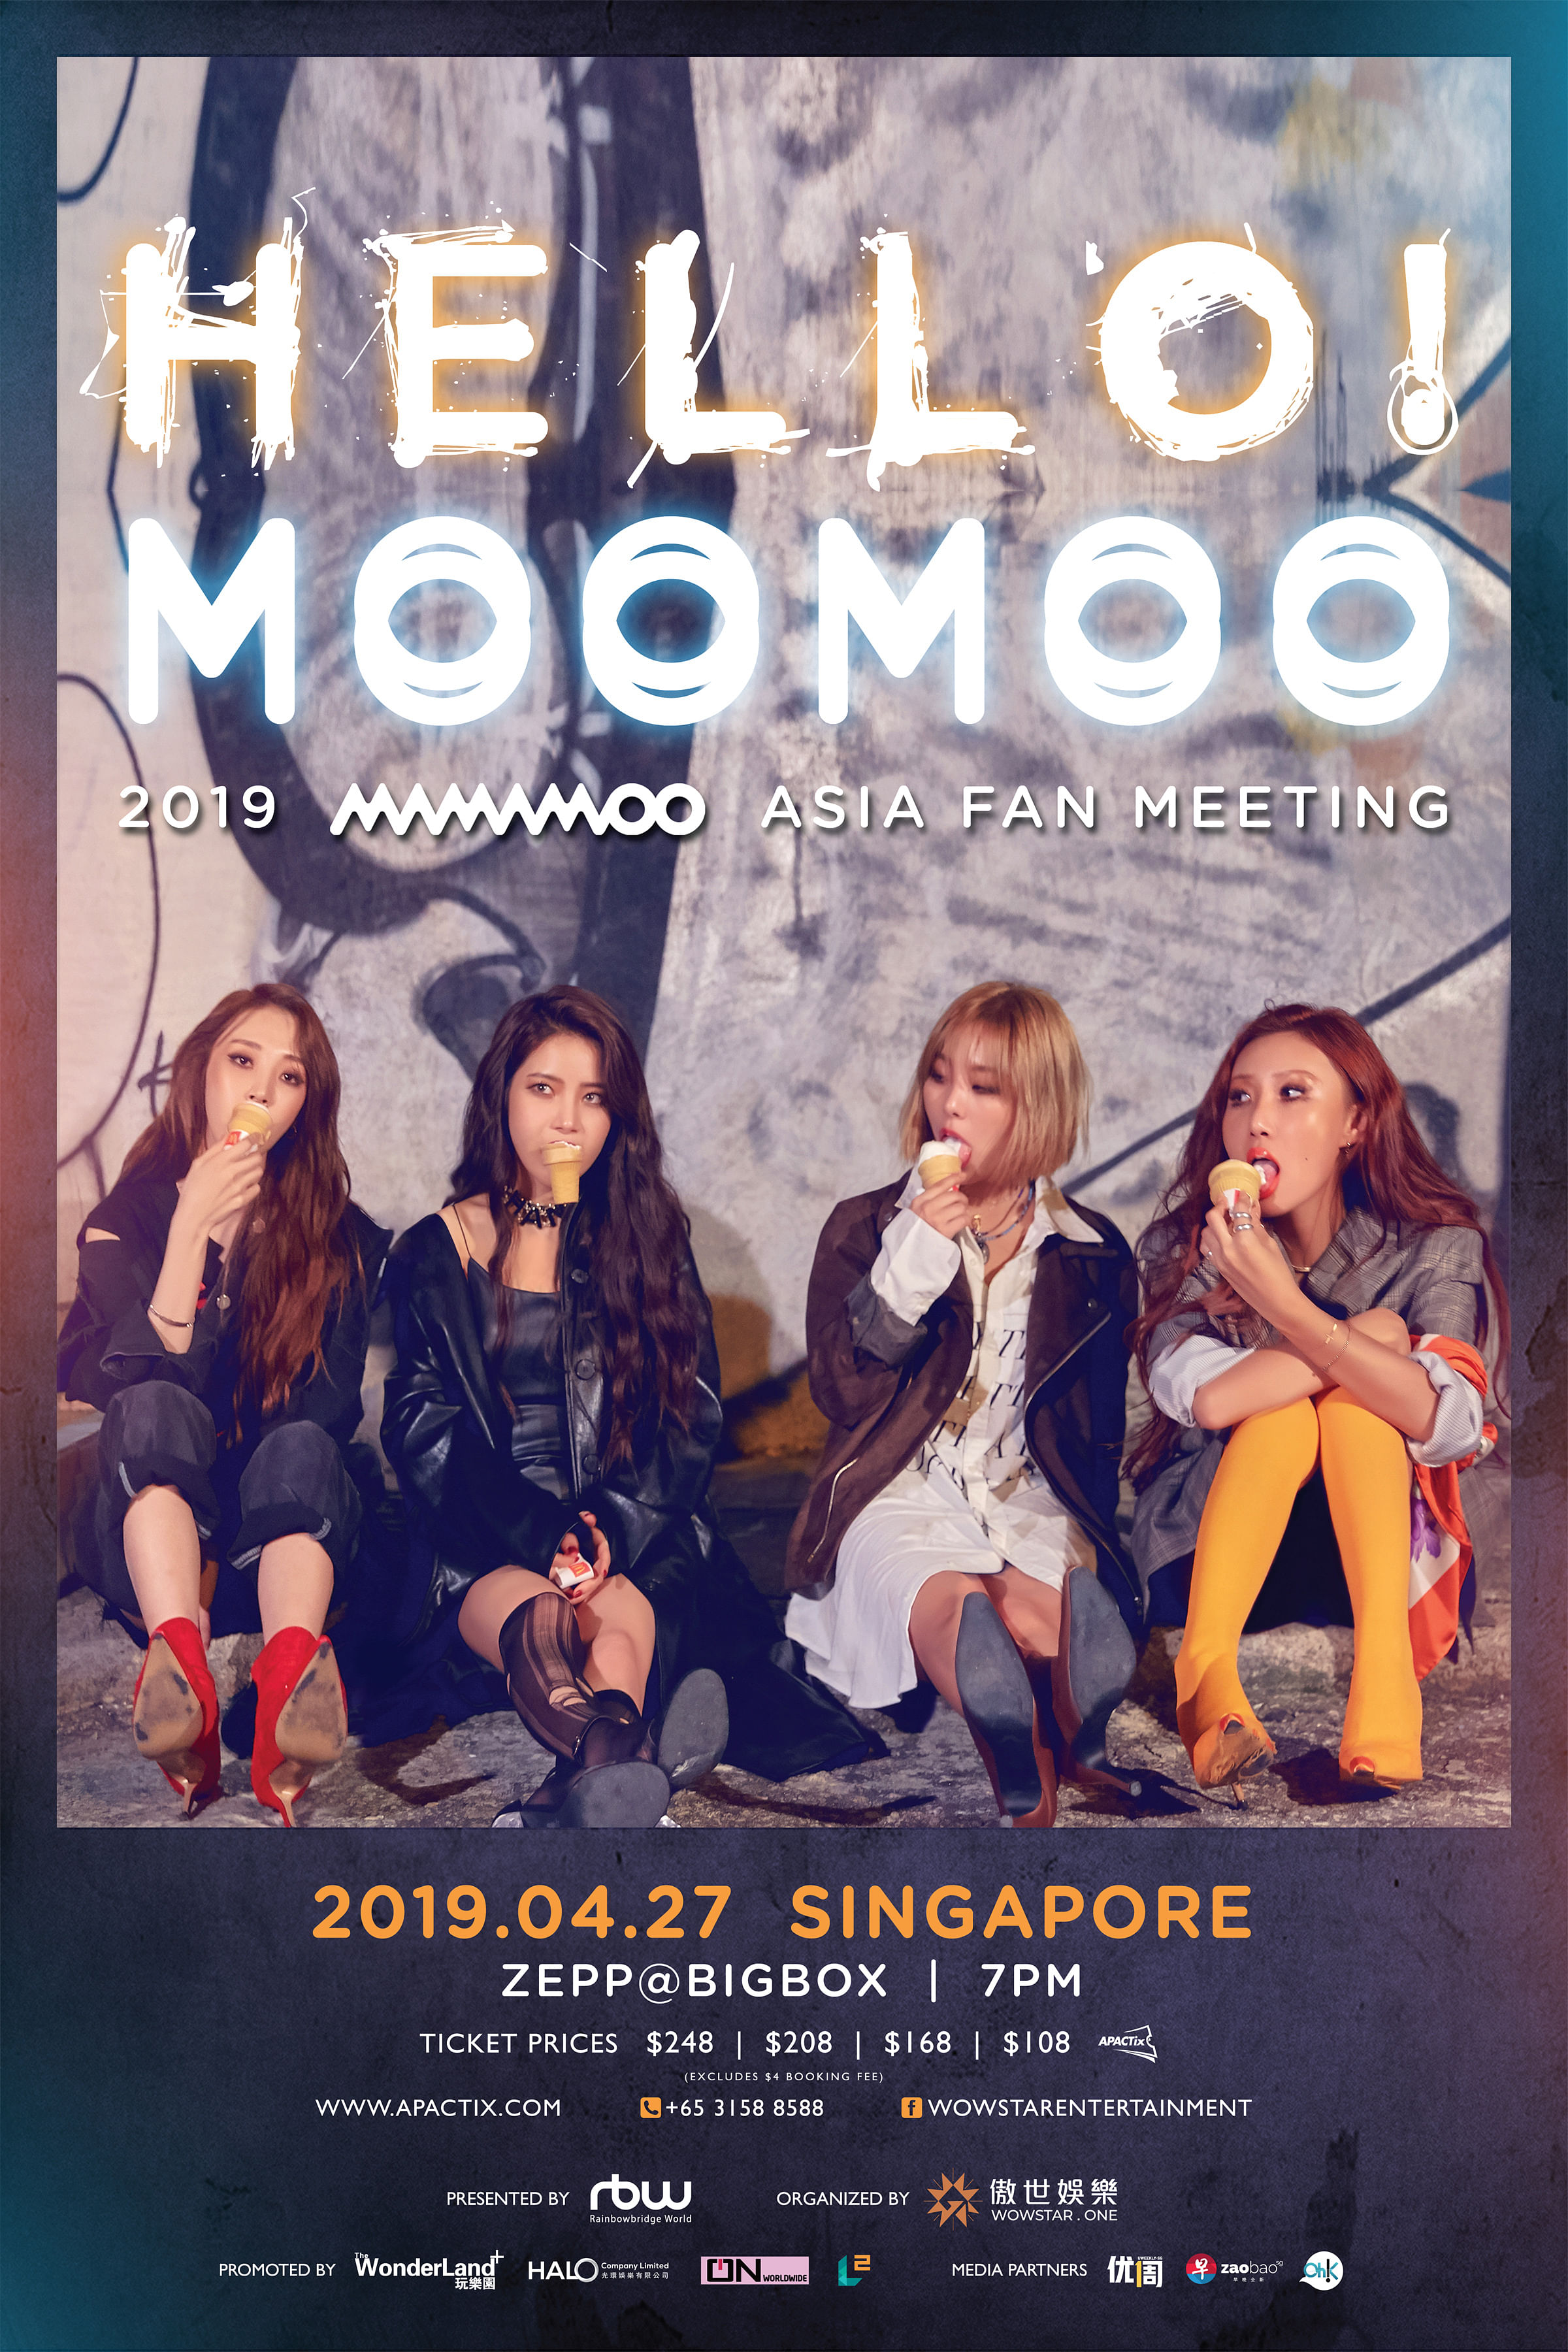 mamamoo-poster-singapore_1.jpg